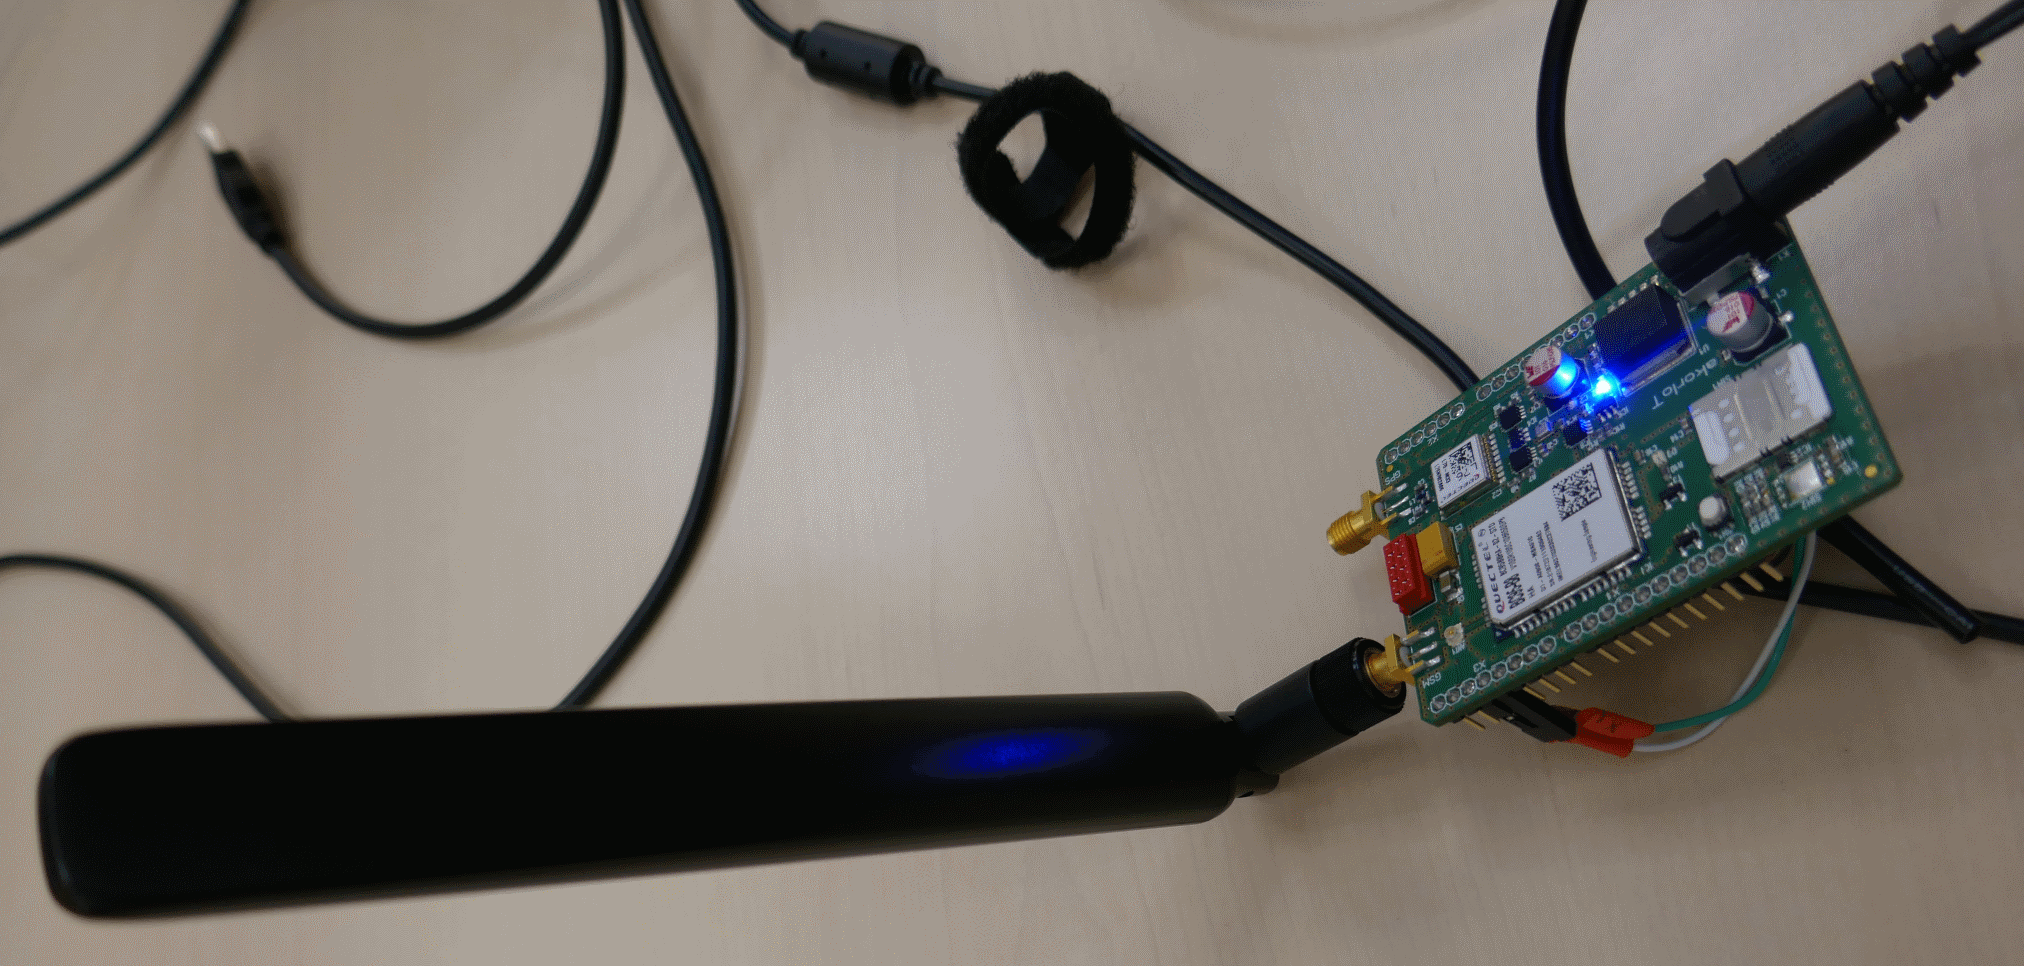 UDP/Ip on NB-IoT send by akorIoT radio adapter